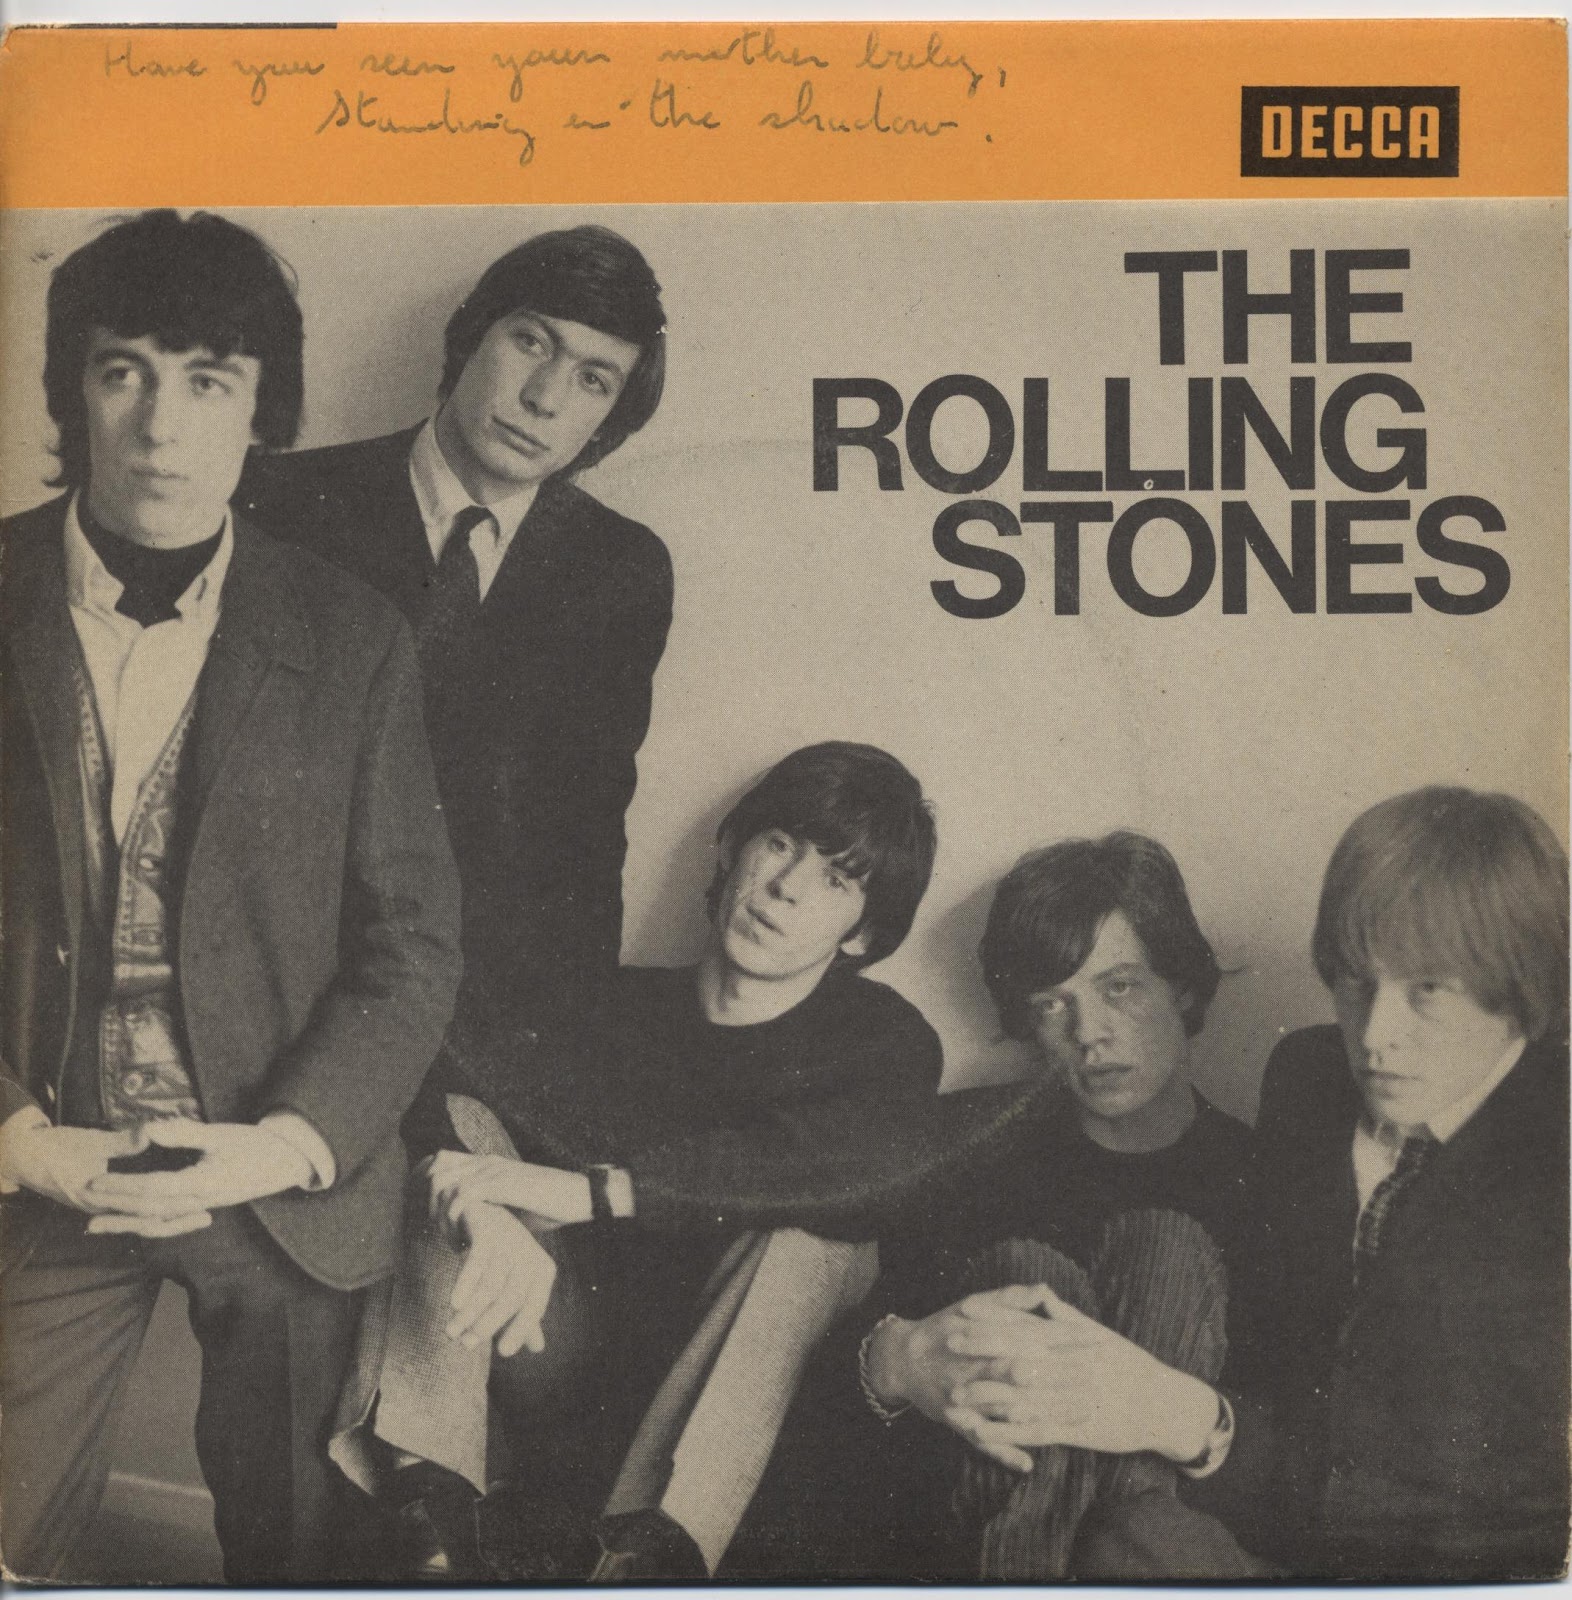 Rolling stones song stoned. Роллинг стоунз 1965. Группа the Rolling Stones альбомы. The Rolling Stones - "the Rolling Stones, Now!" (1965). Роллинг стоунз альбом 1995.